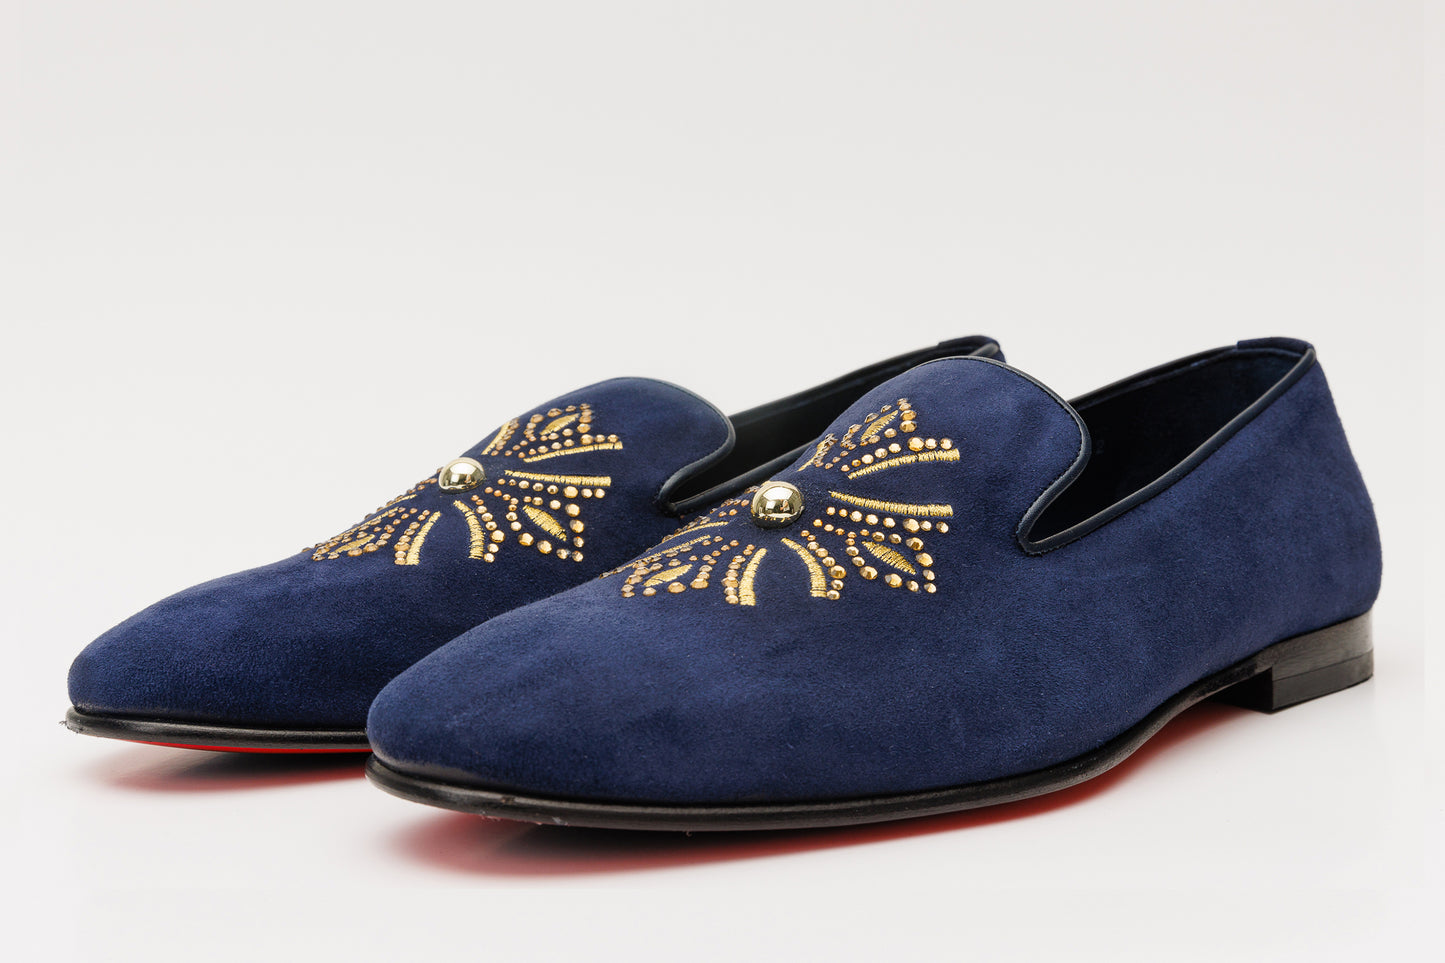 The Lazio Shoe Navy Blue Suede Slip-on Loafer Men Shoe